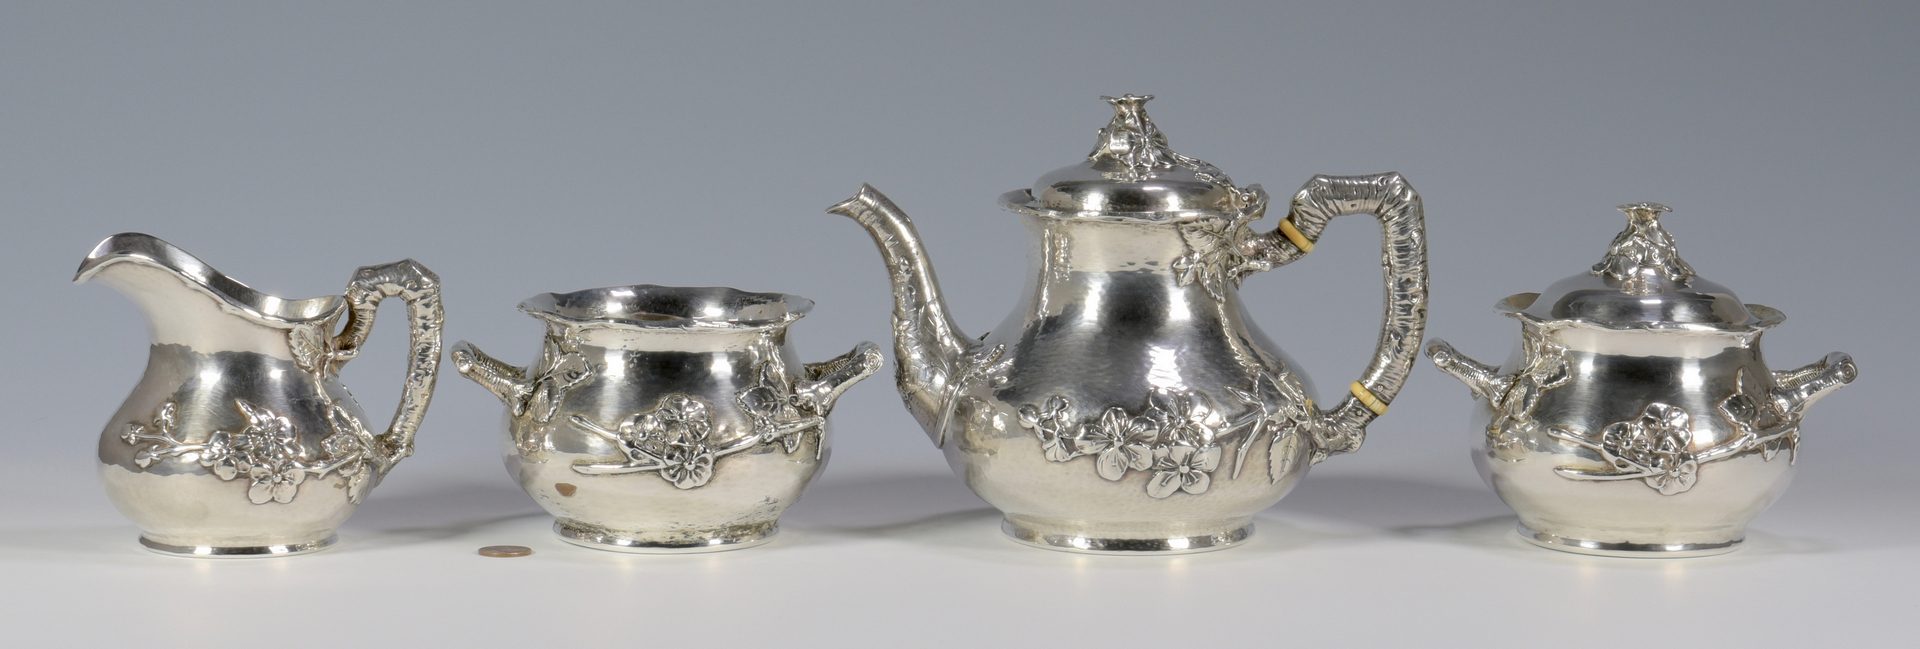 Lot 56: Gorham Hammered Aesthetic Silver Tea Service